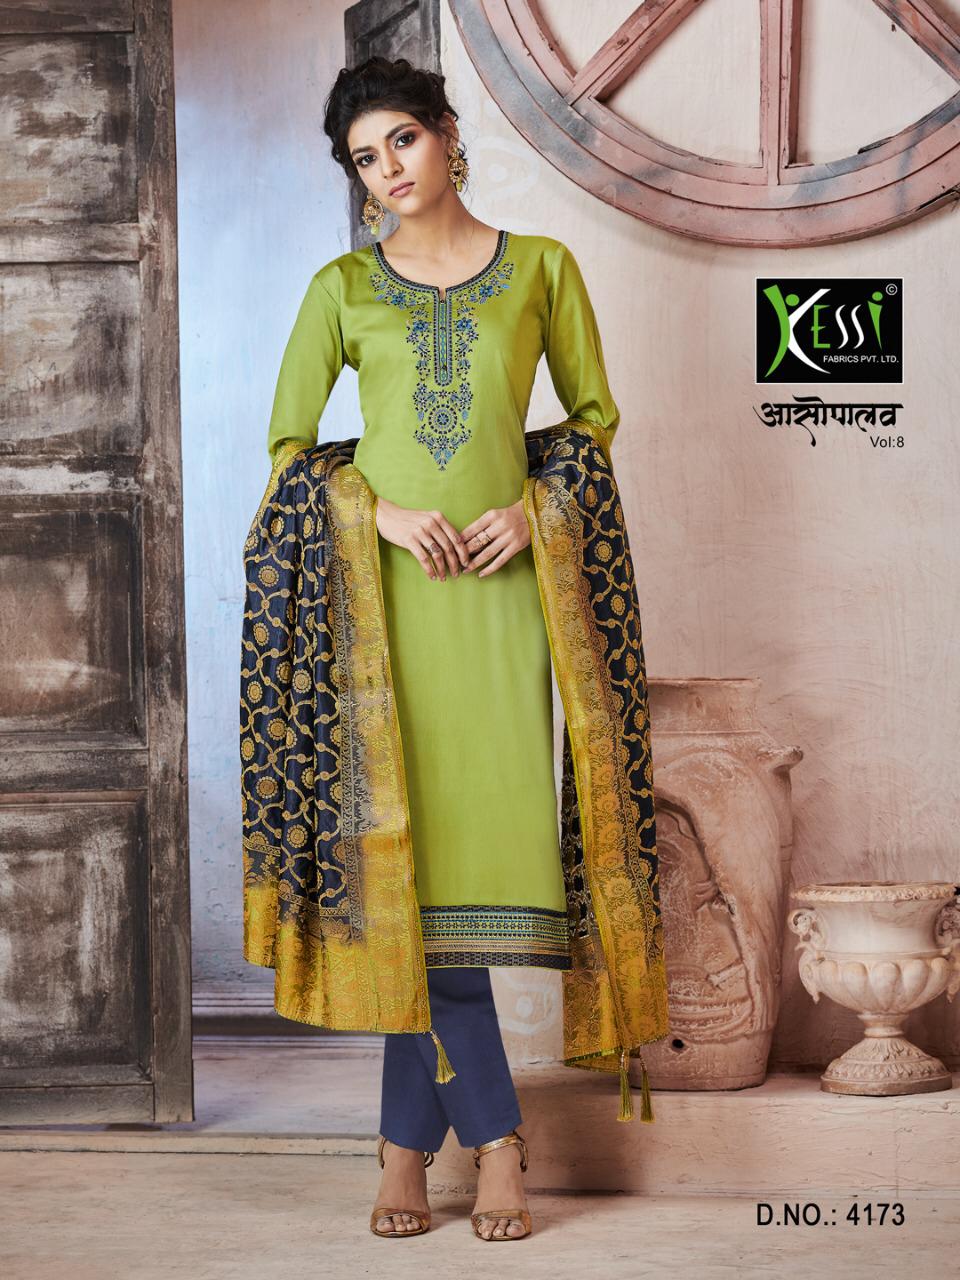 kessi fabrics asopalav vol 8 colorful fancy collection of salwaar suits